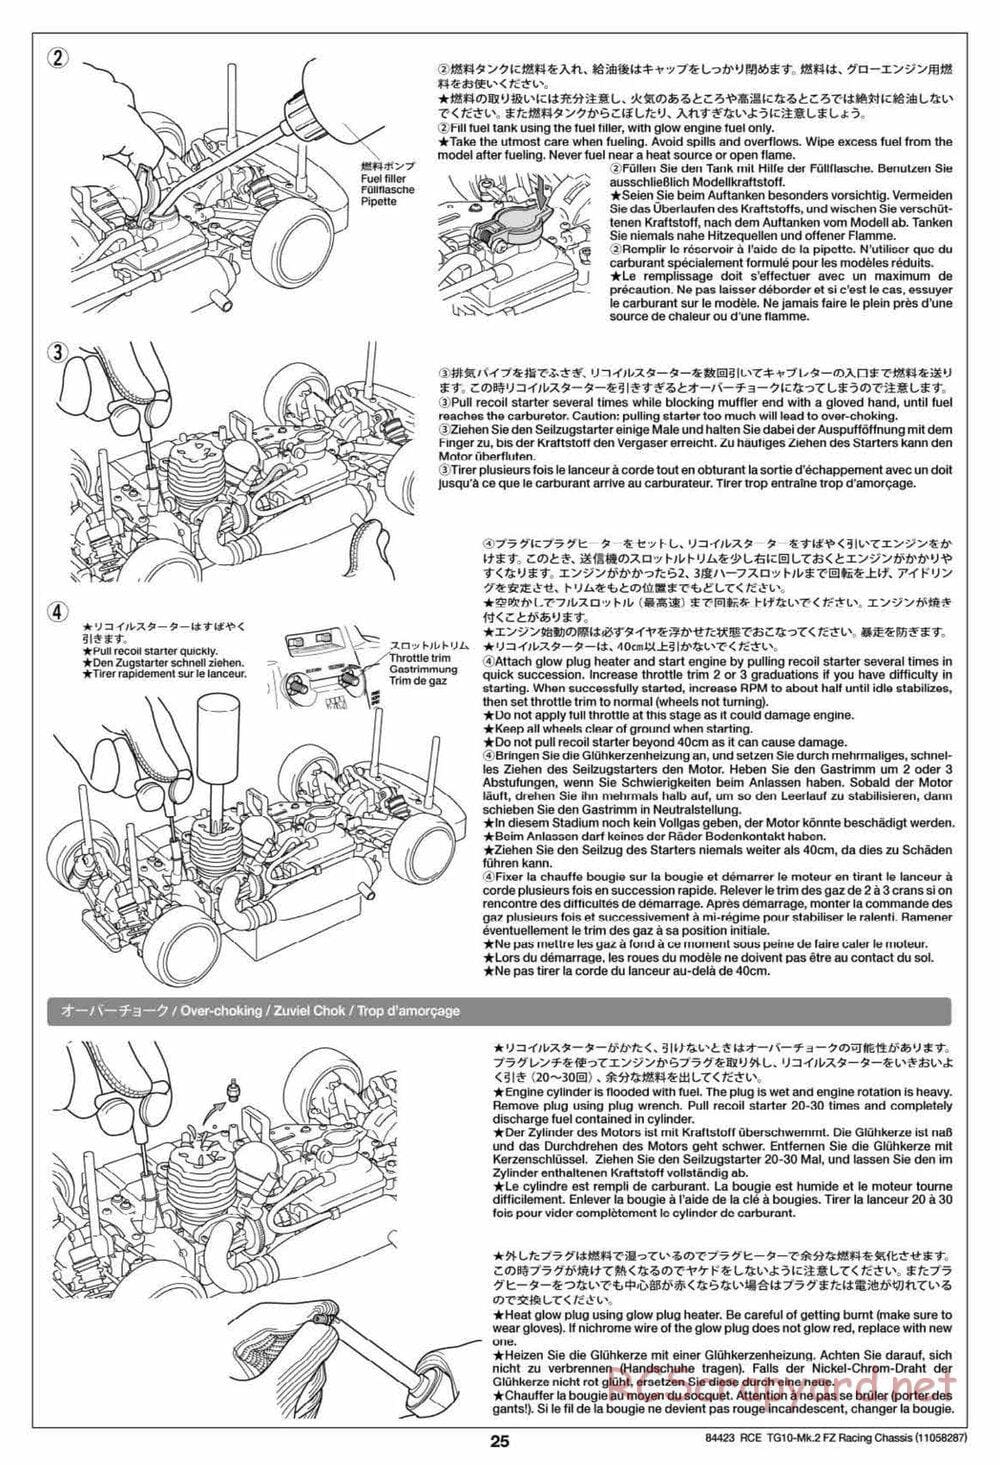 Tamiya - TG10 Mk.2 FZ Racing Chassis - Manual - Page 25